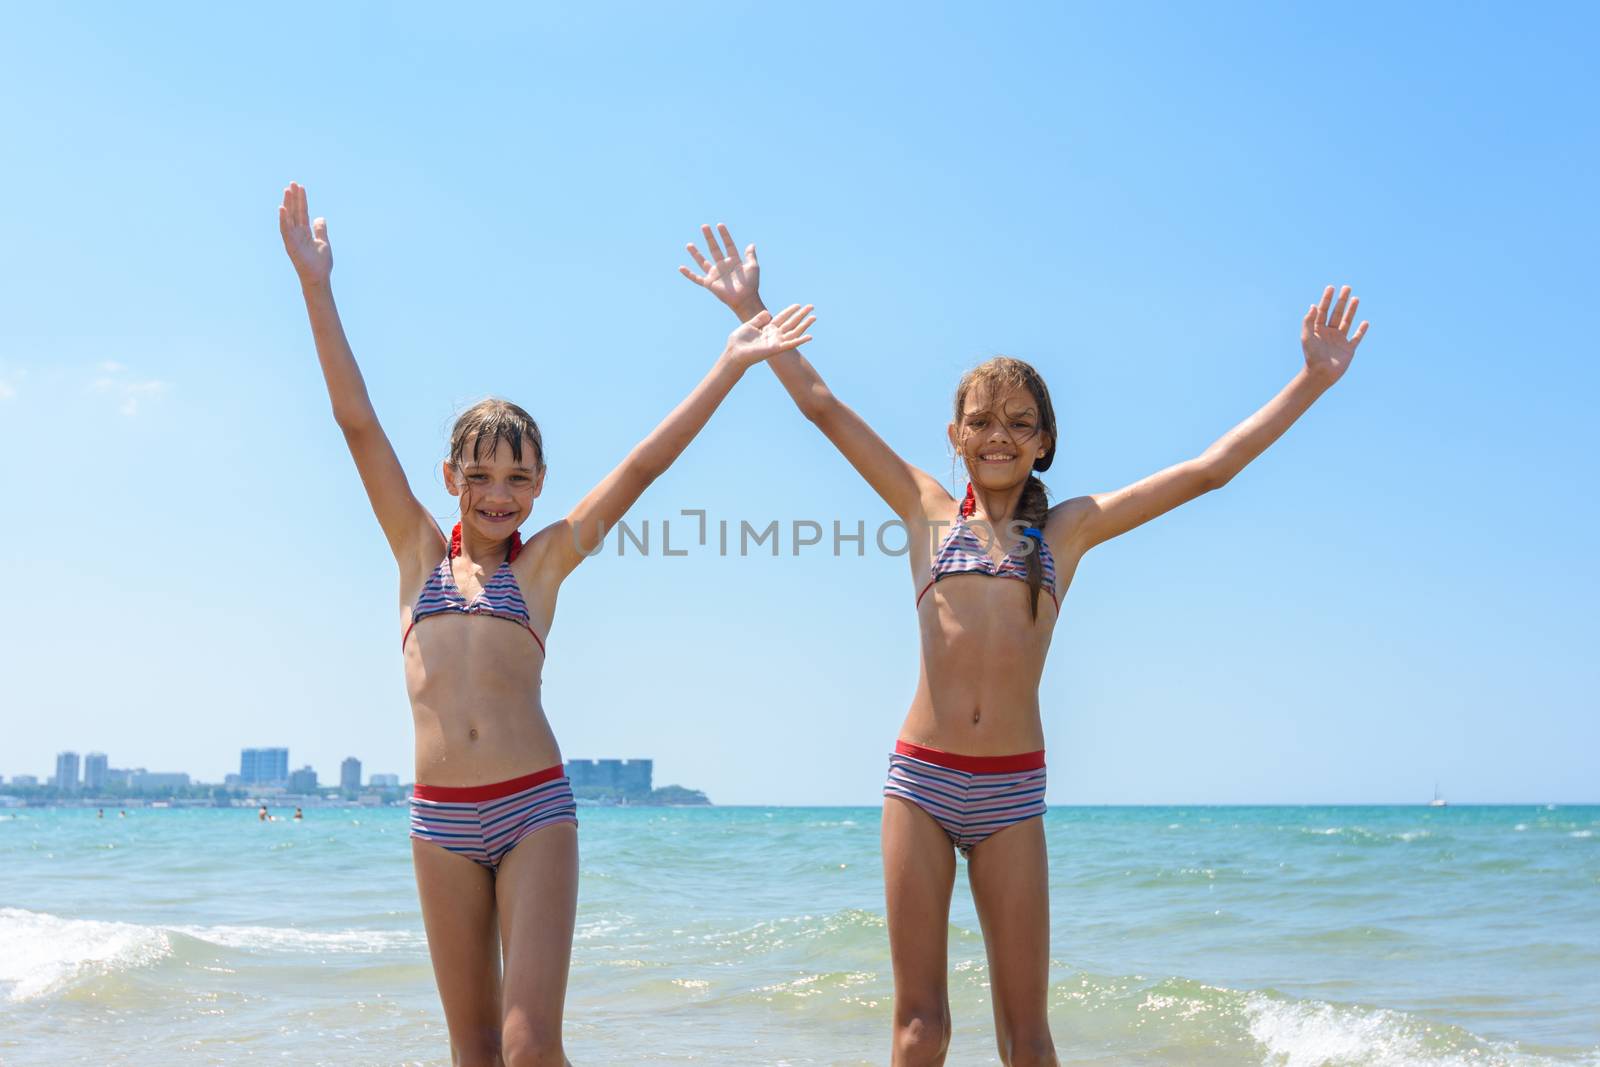 Two girls joyfully raised their hands up on the seashore